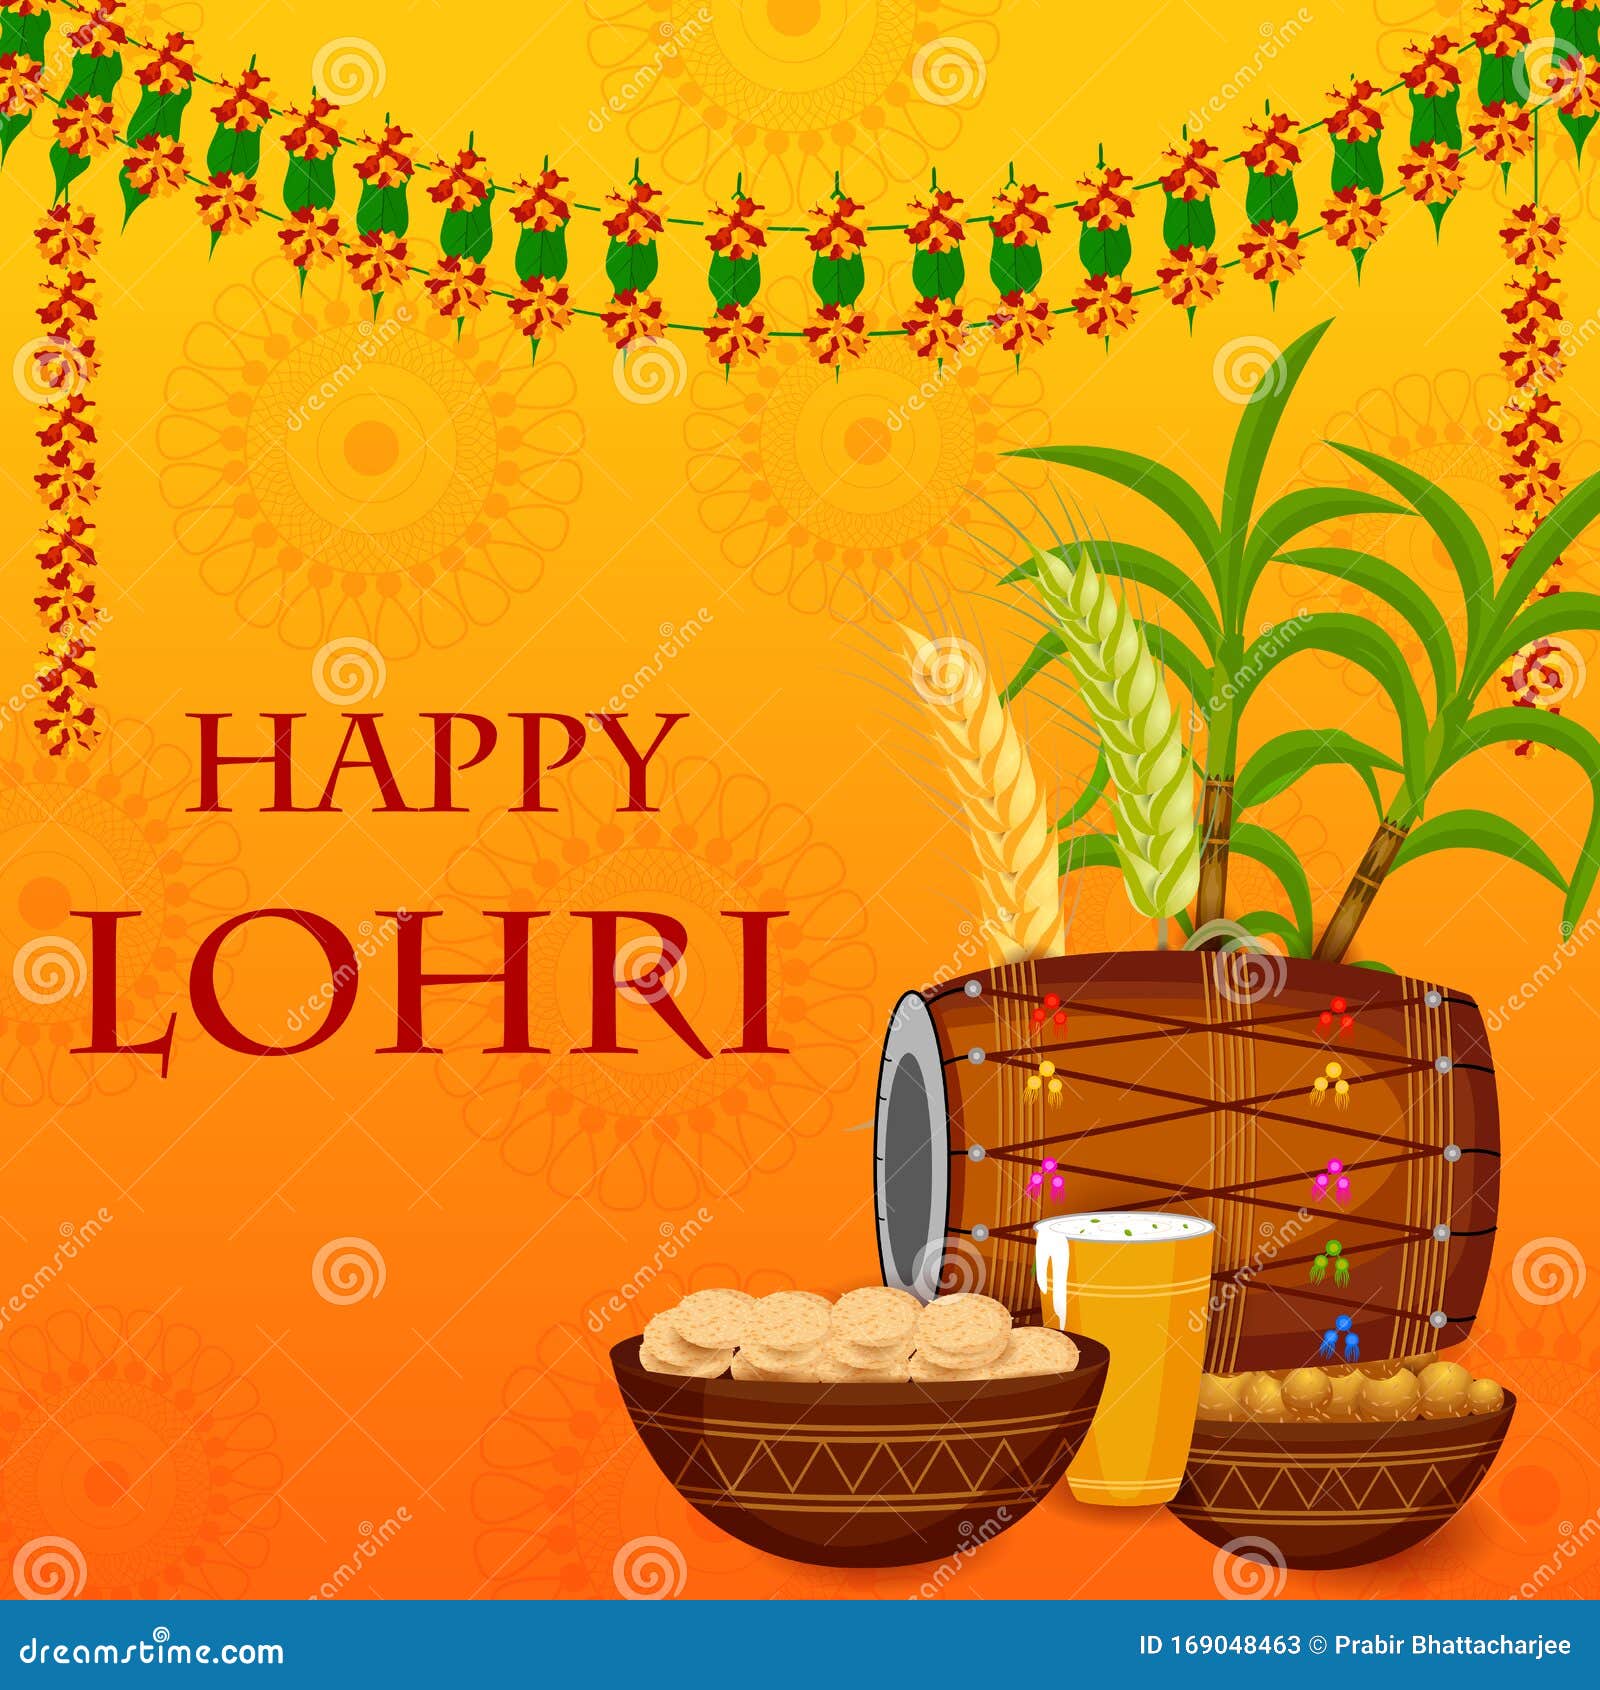 Harvest Festival of Punjab, India Happy Lohri Holiday Background Stock  Vector - Illustration of occasion, baisakhi: 169048463